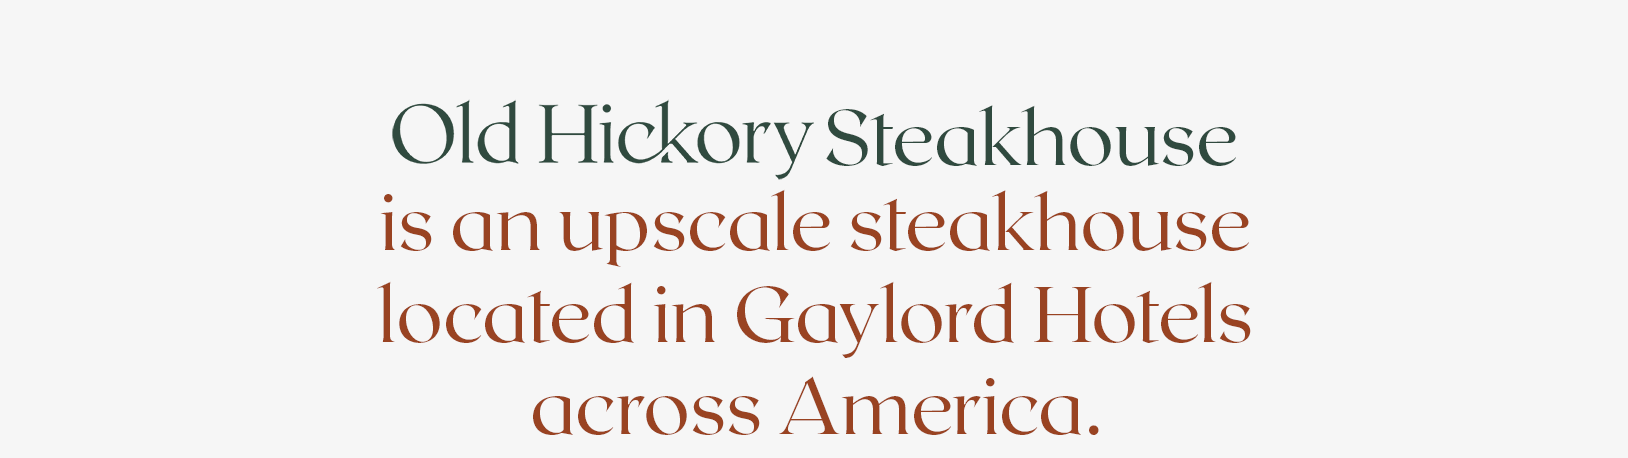 Description of Old Hickory Steakhouse